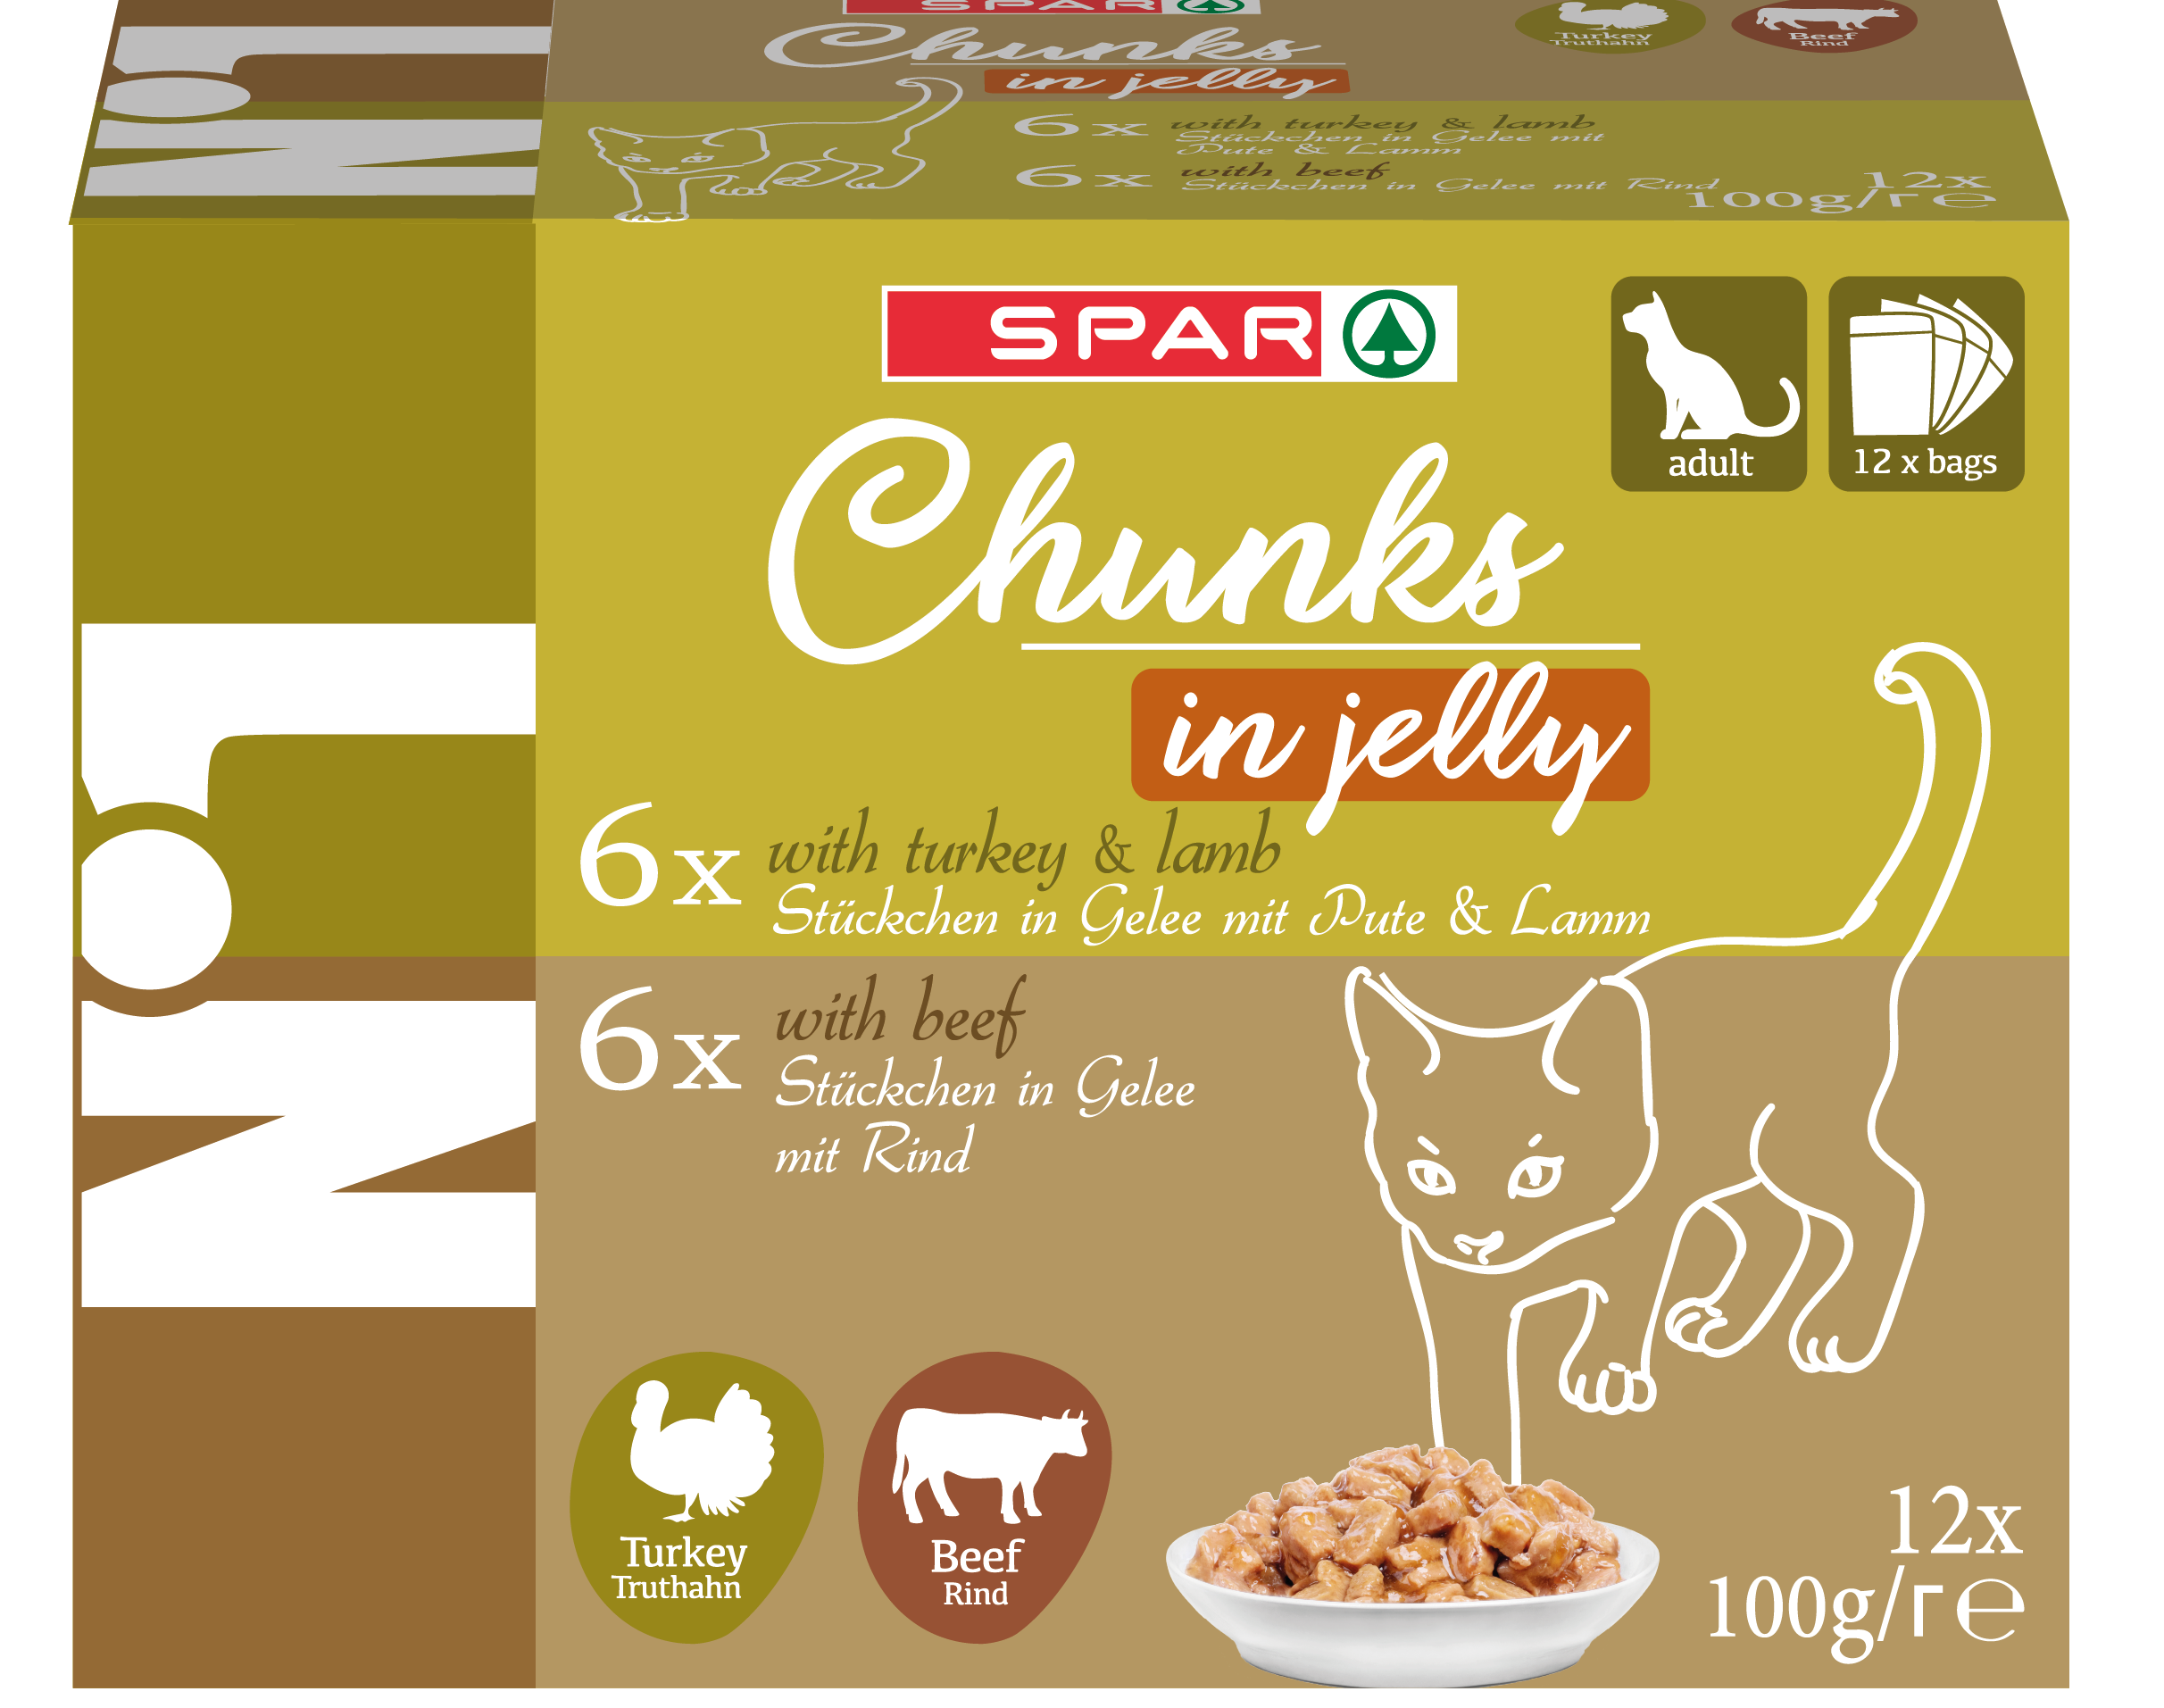 SPAR's own-brand pet food range is here